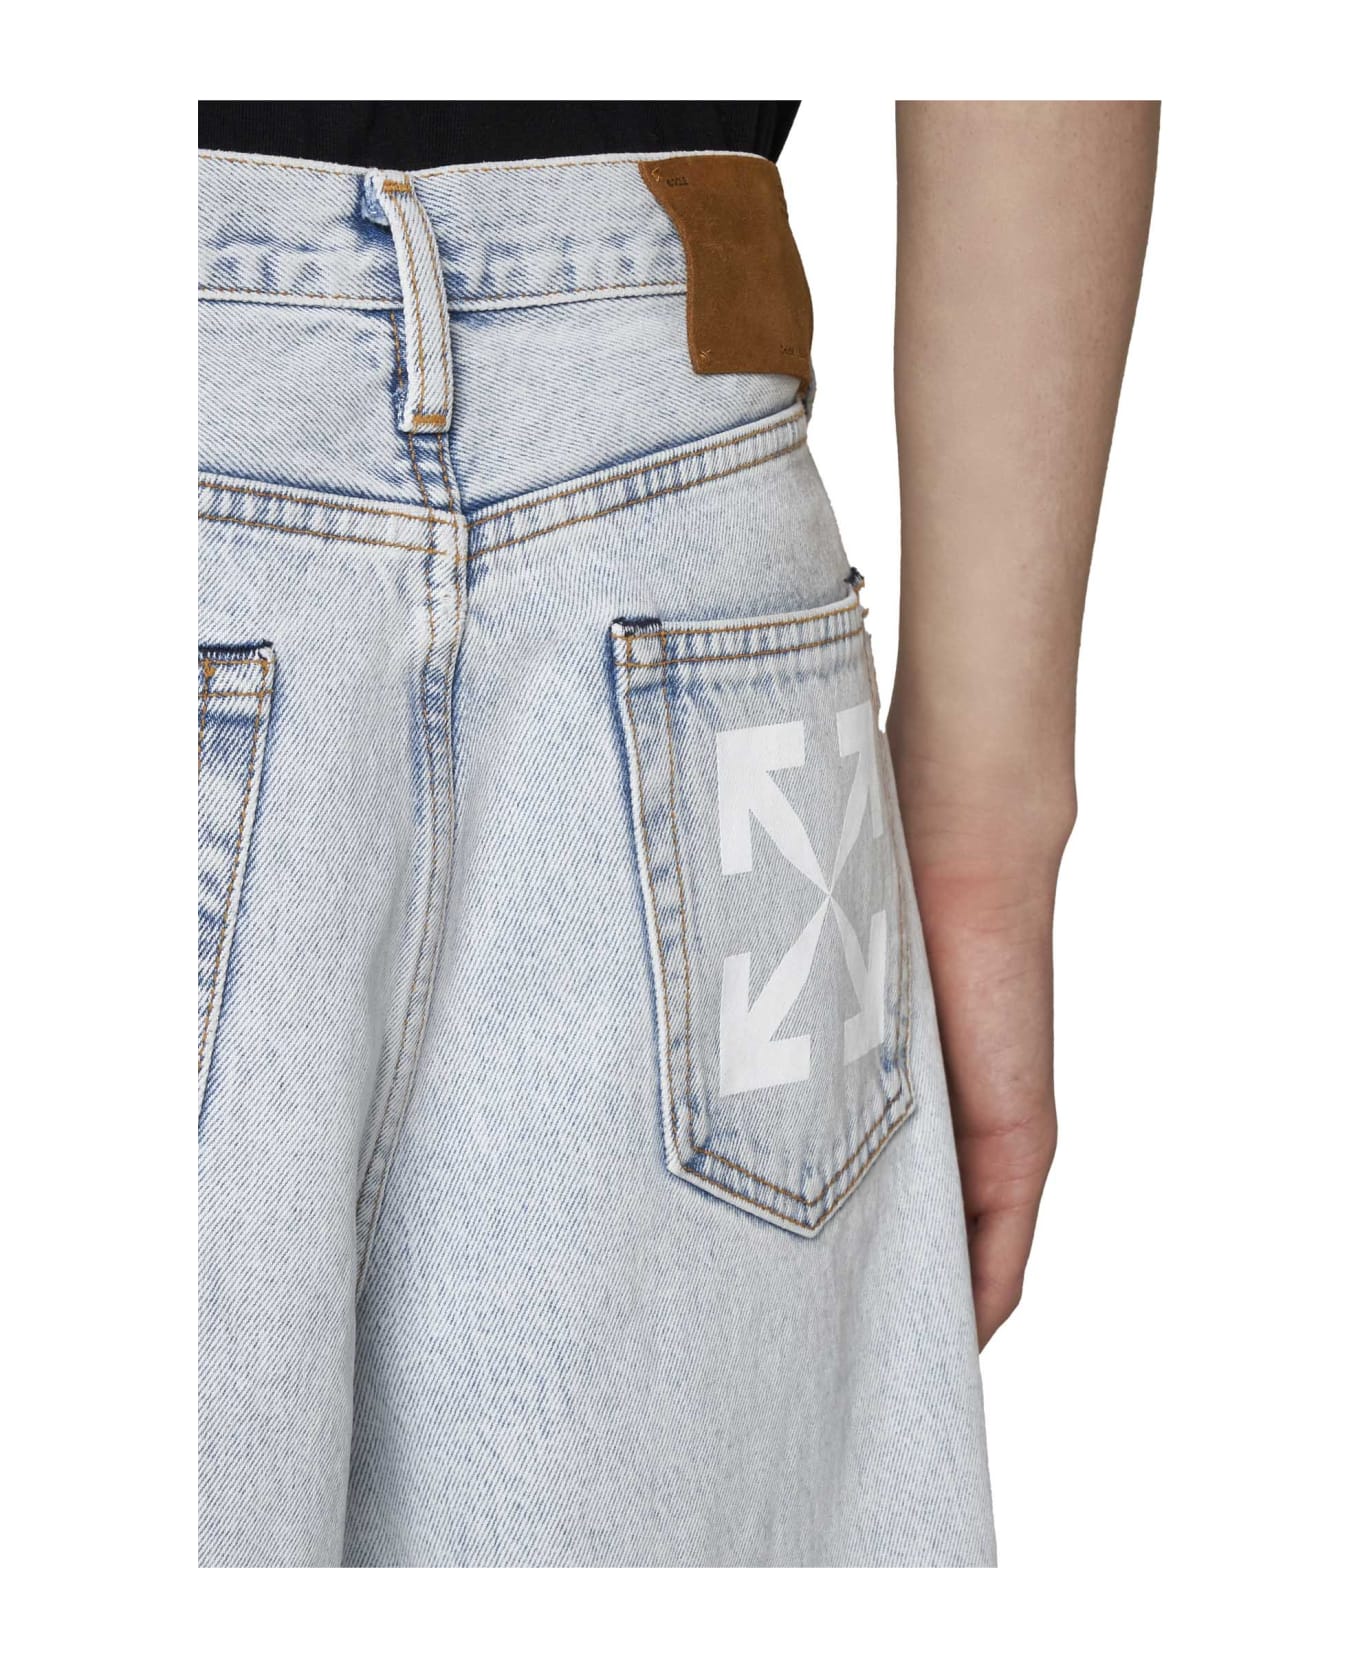 Off-White Single Arrow Shorts Jeans - Bleach blue